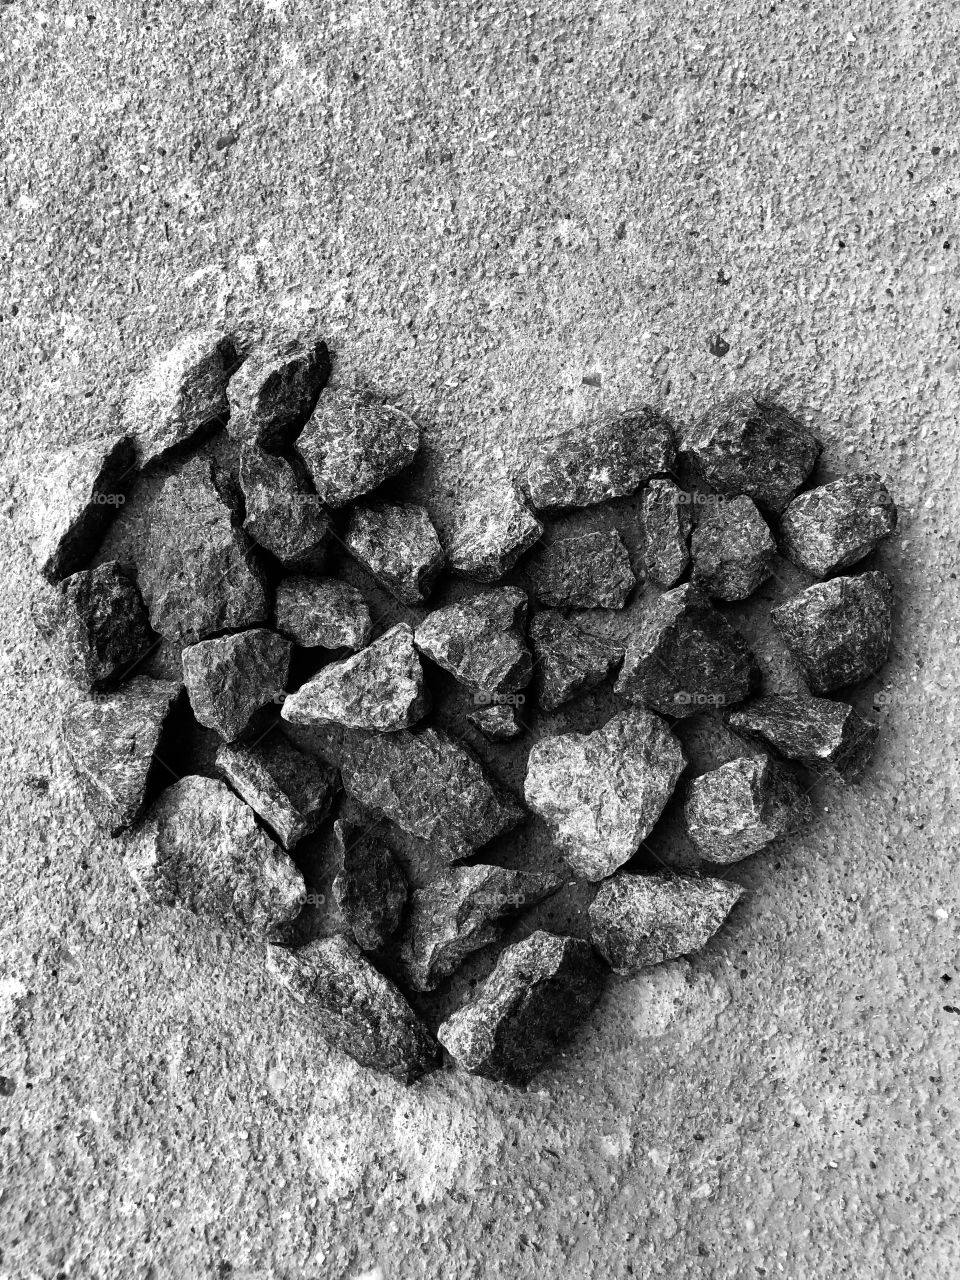 Solid Rock Heart